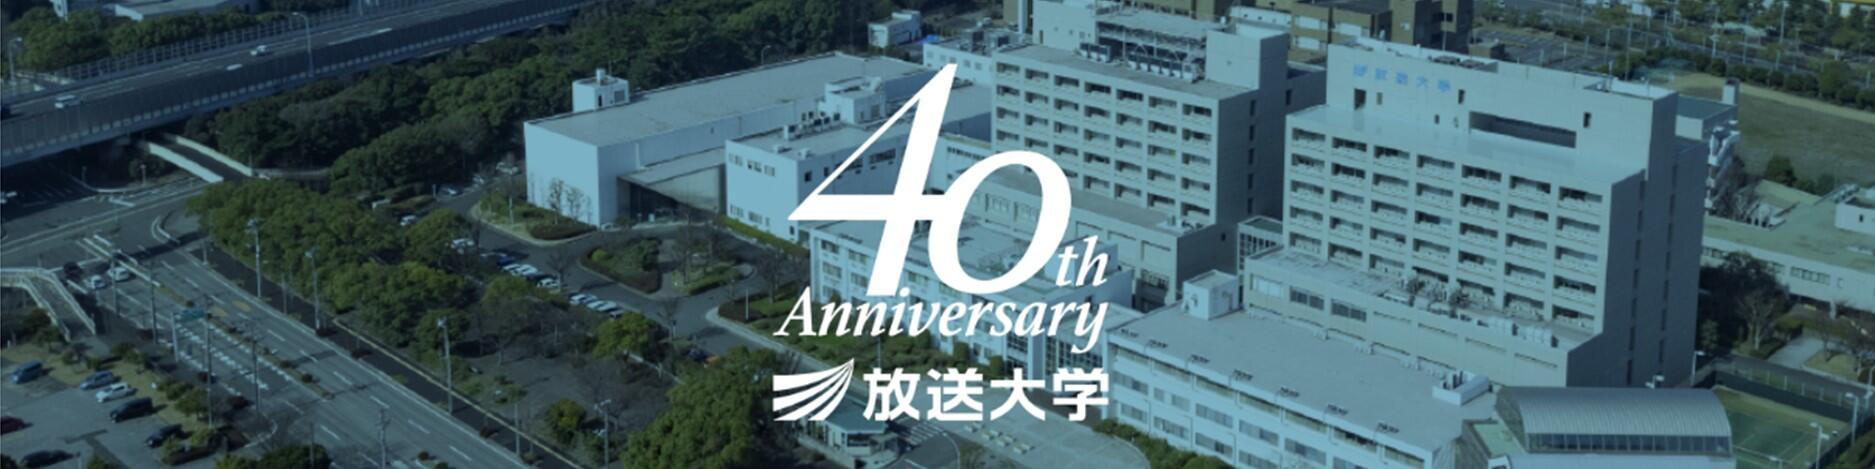 【バナー】【1200×300】放送大学40周年.jpg